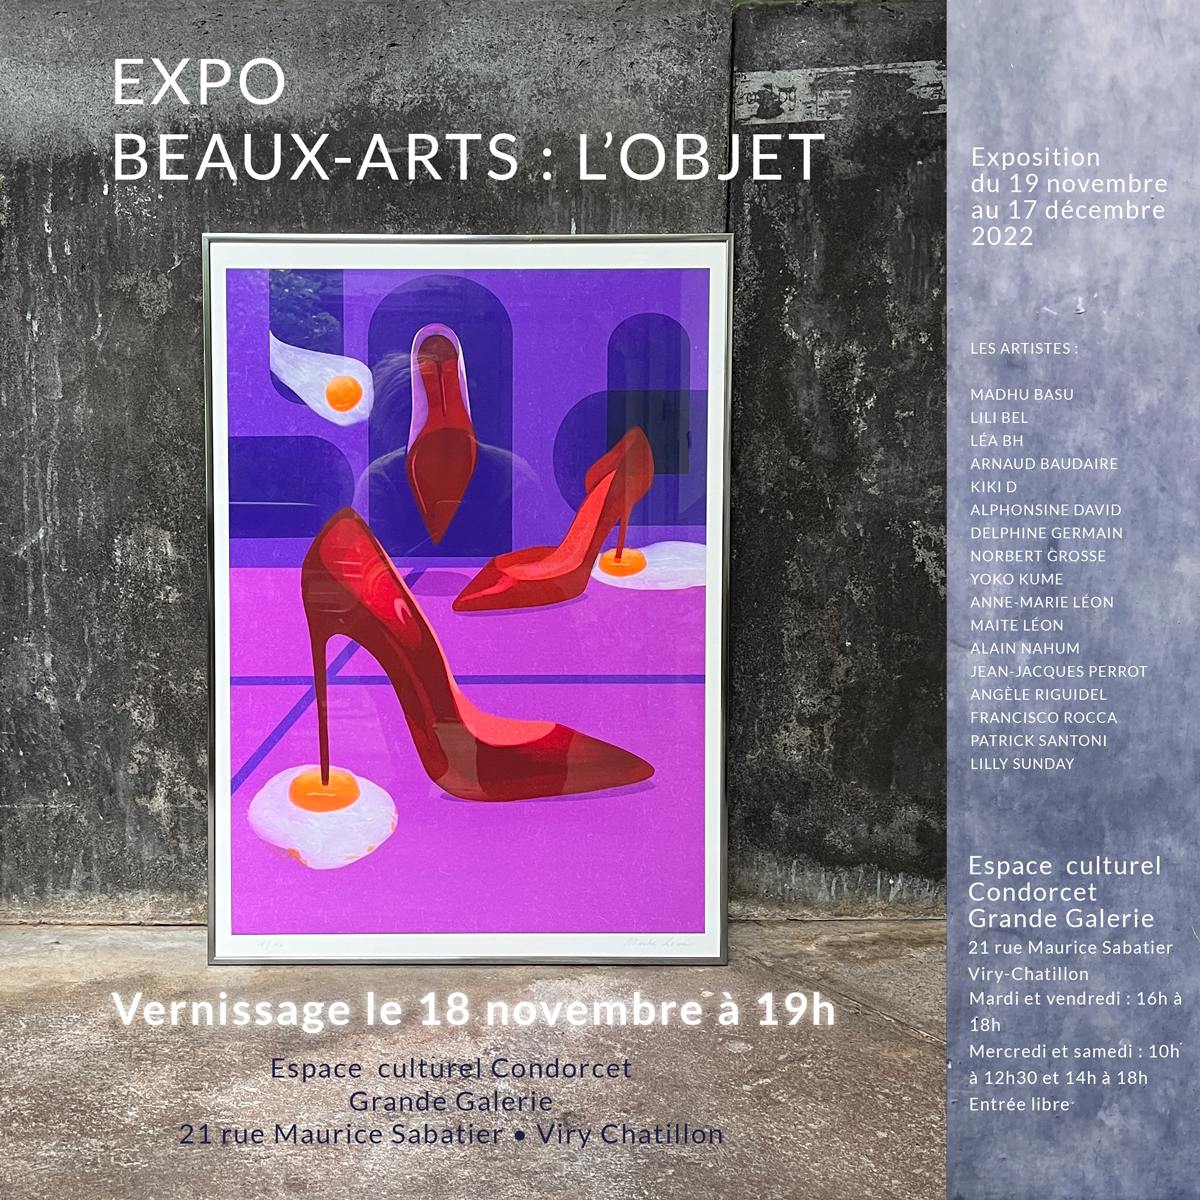 EXPO-BEAUX-ARTS-LOBJET-MAITE-LEON